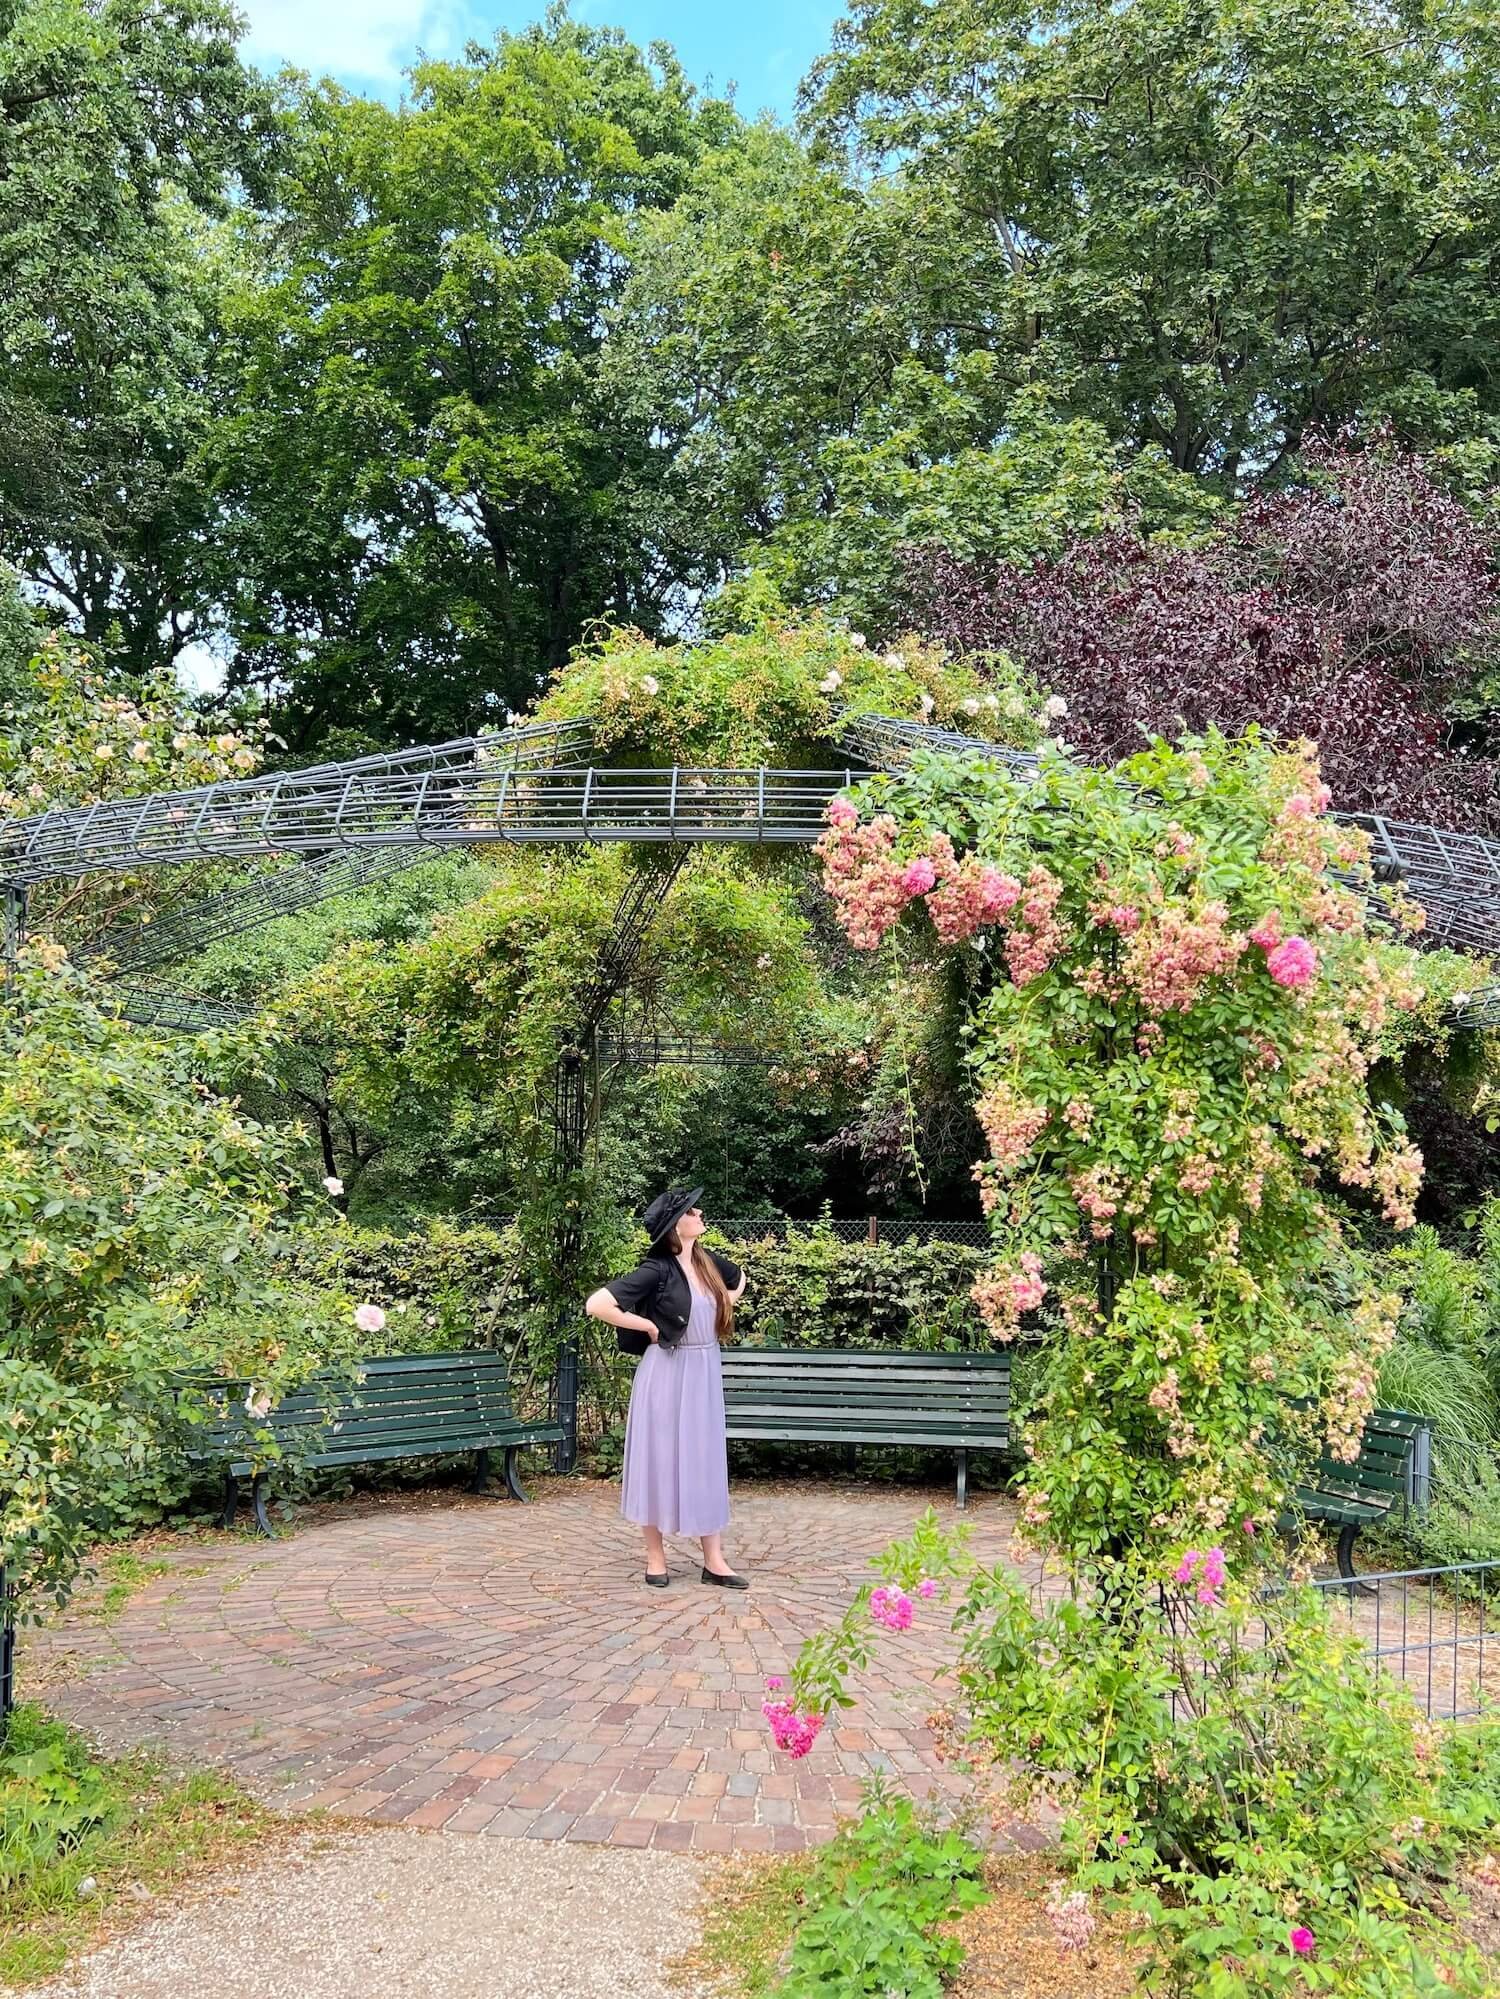 jenna in the rose arbor at the tiergarten.JPG